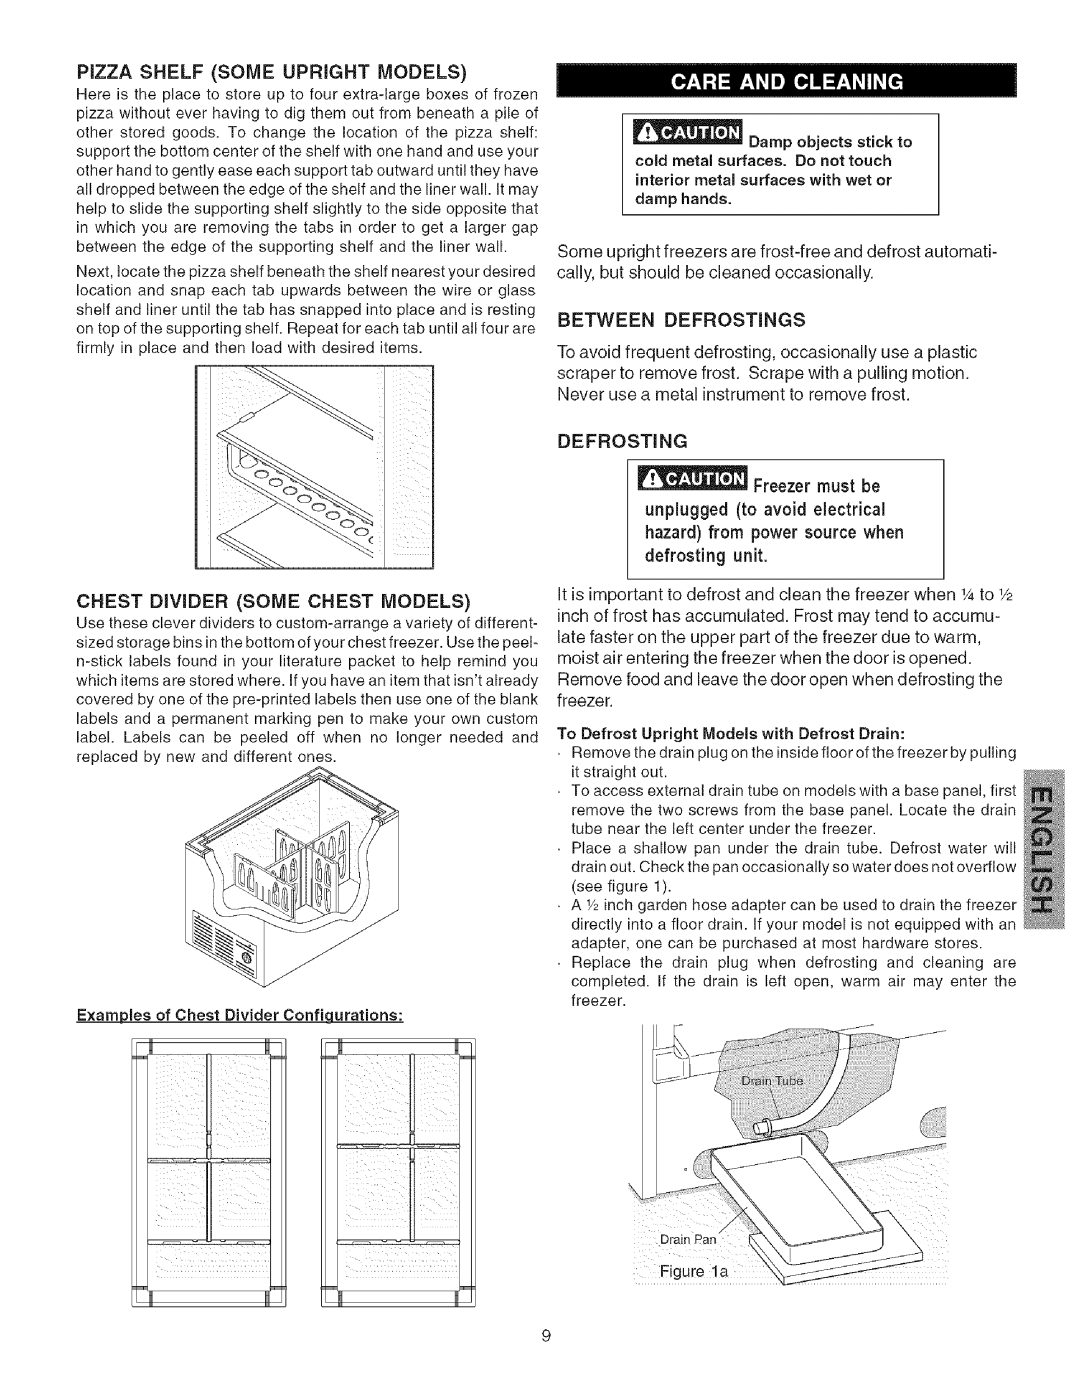 Kenmore 25316592102, Freezer, 25316582102 manual Pizza Shelf Some Upright Models, Chest Divider Some Chest Models, Defrosting 